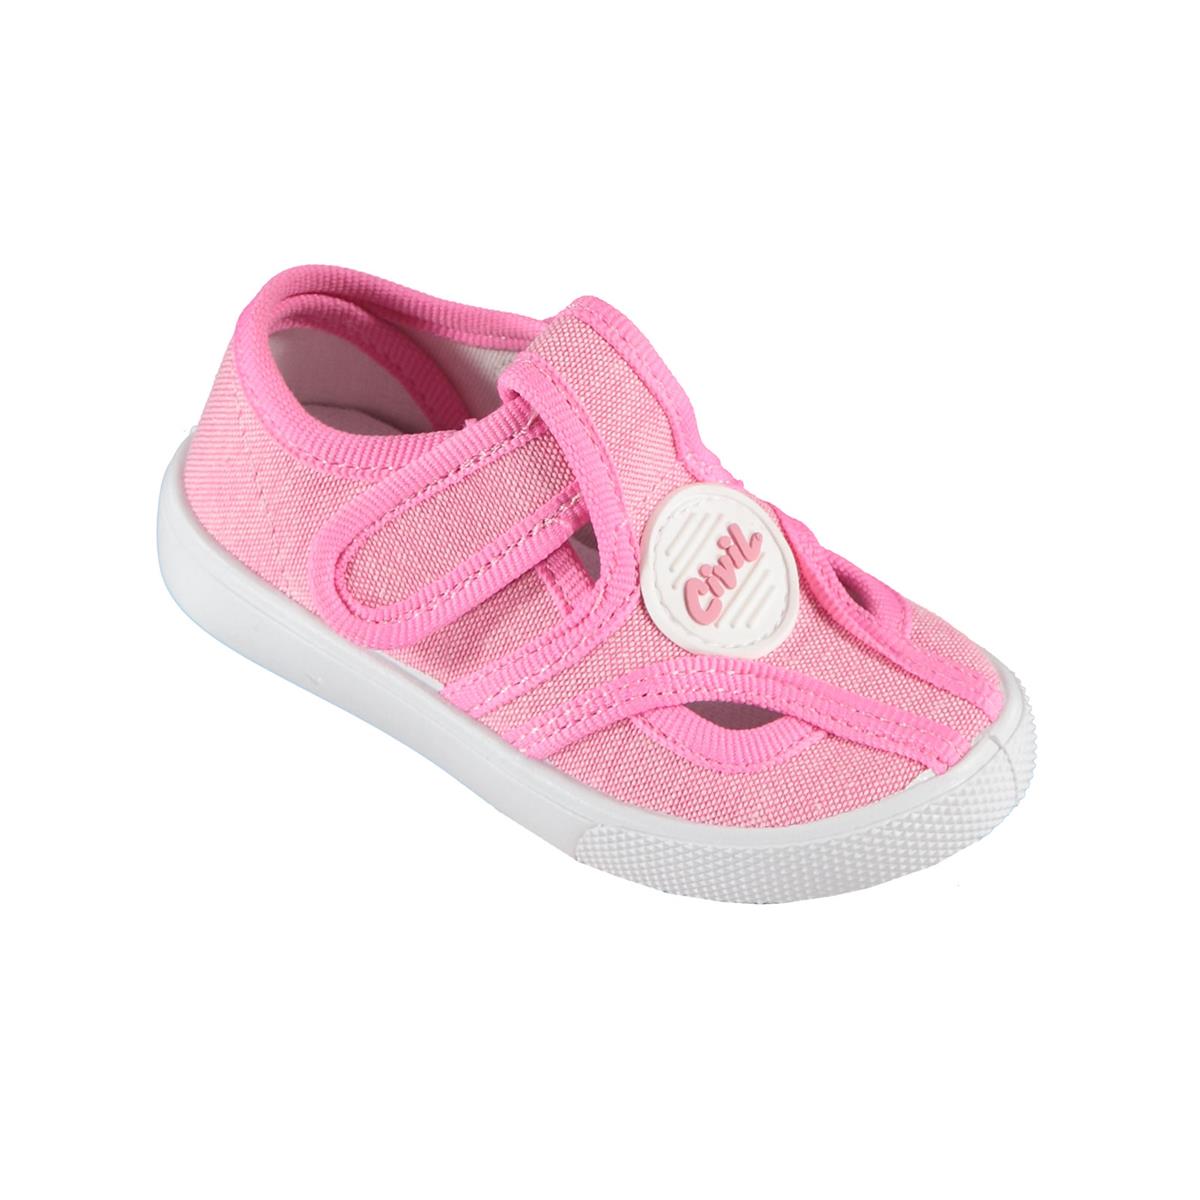 Civil Kız Bebek Keten Ayakkabı 21-25 Numara Pembe